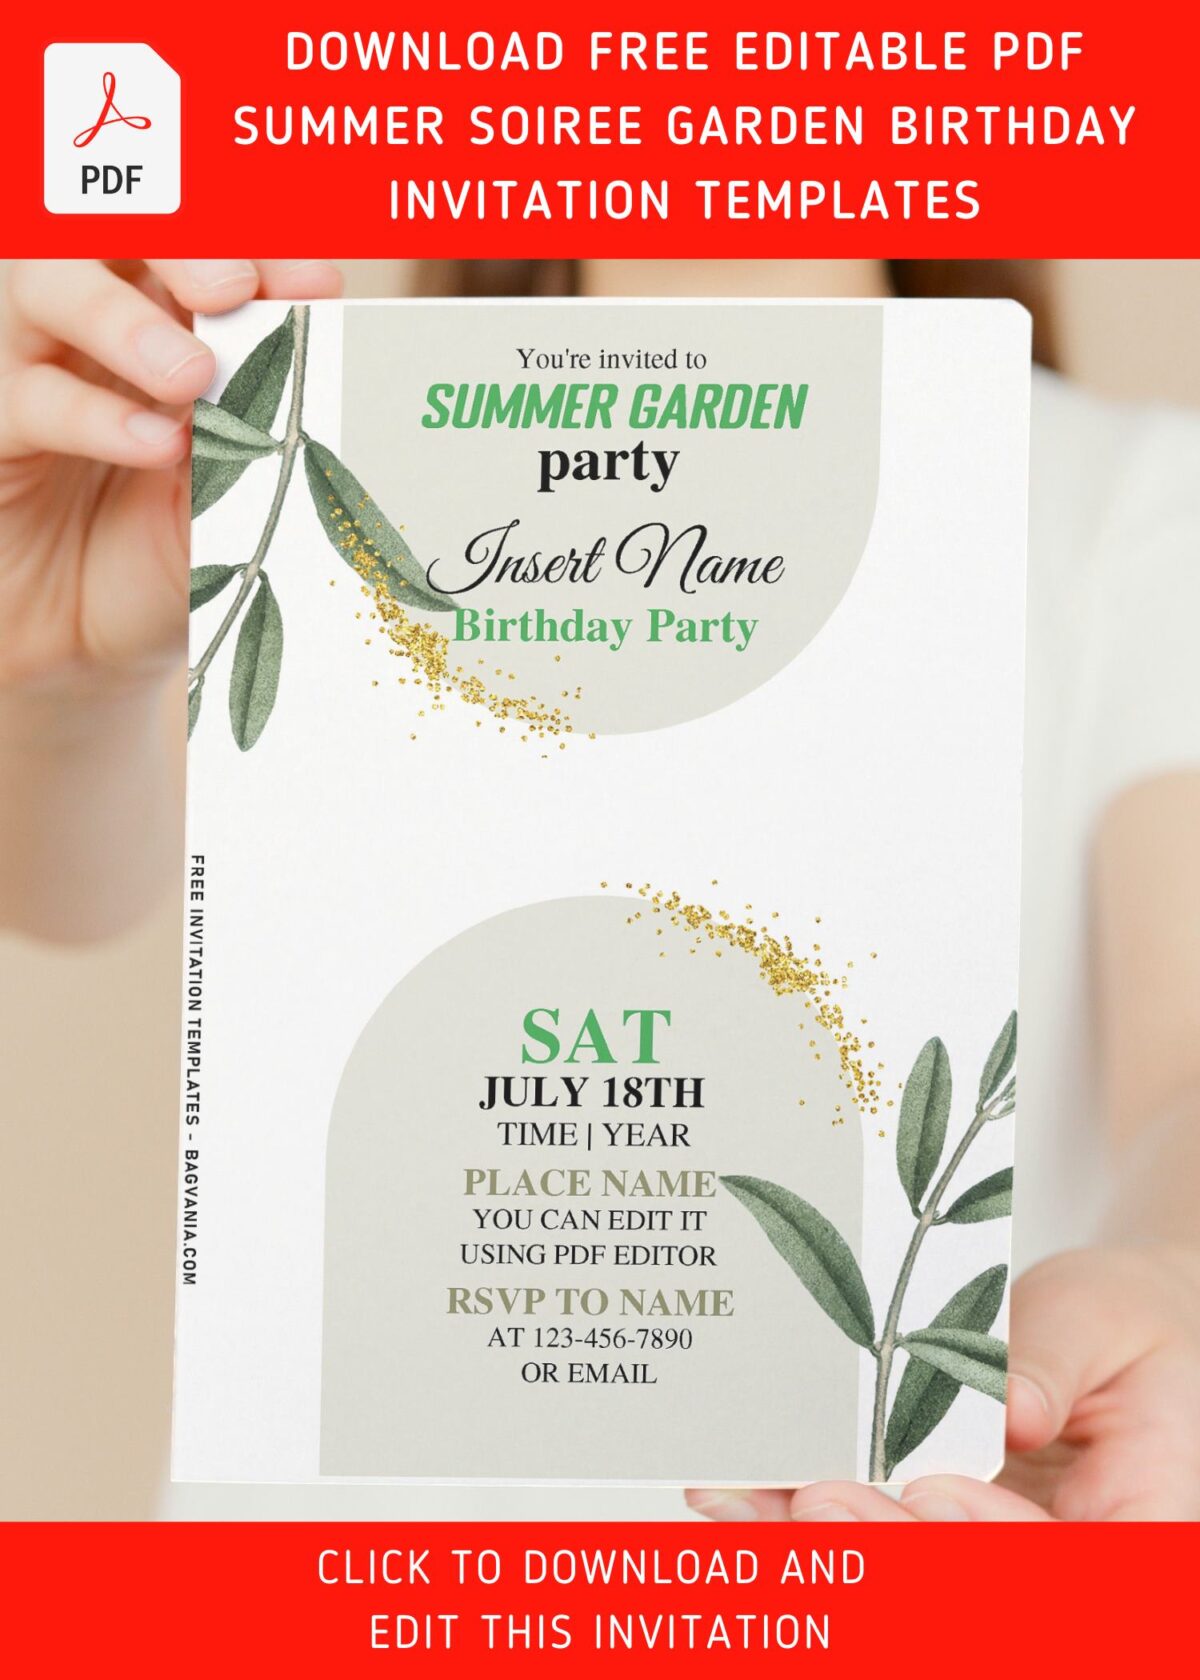 (Free Editable PDF) Lively Garden Soiree Birthday Invitation Templates with editable text